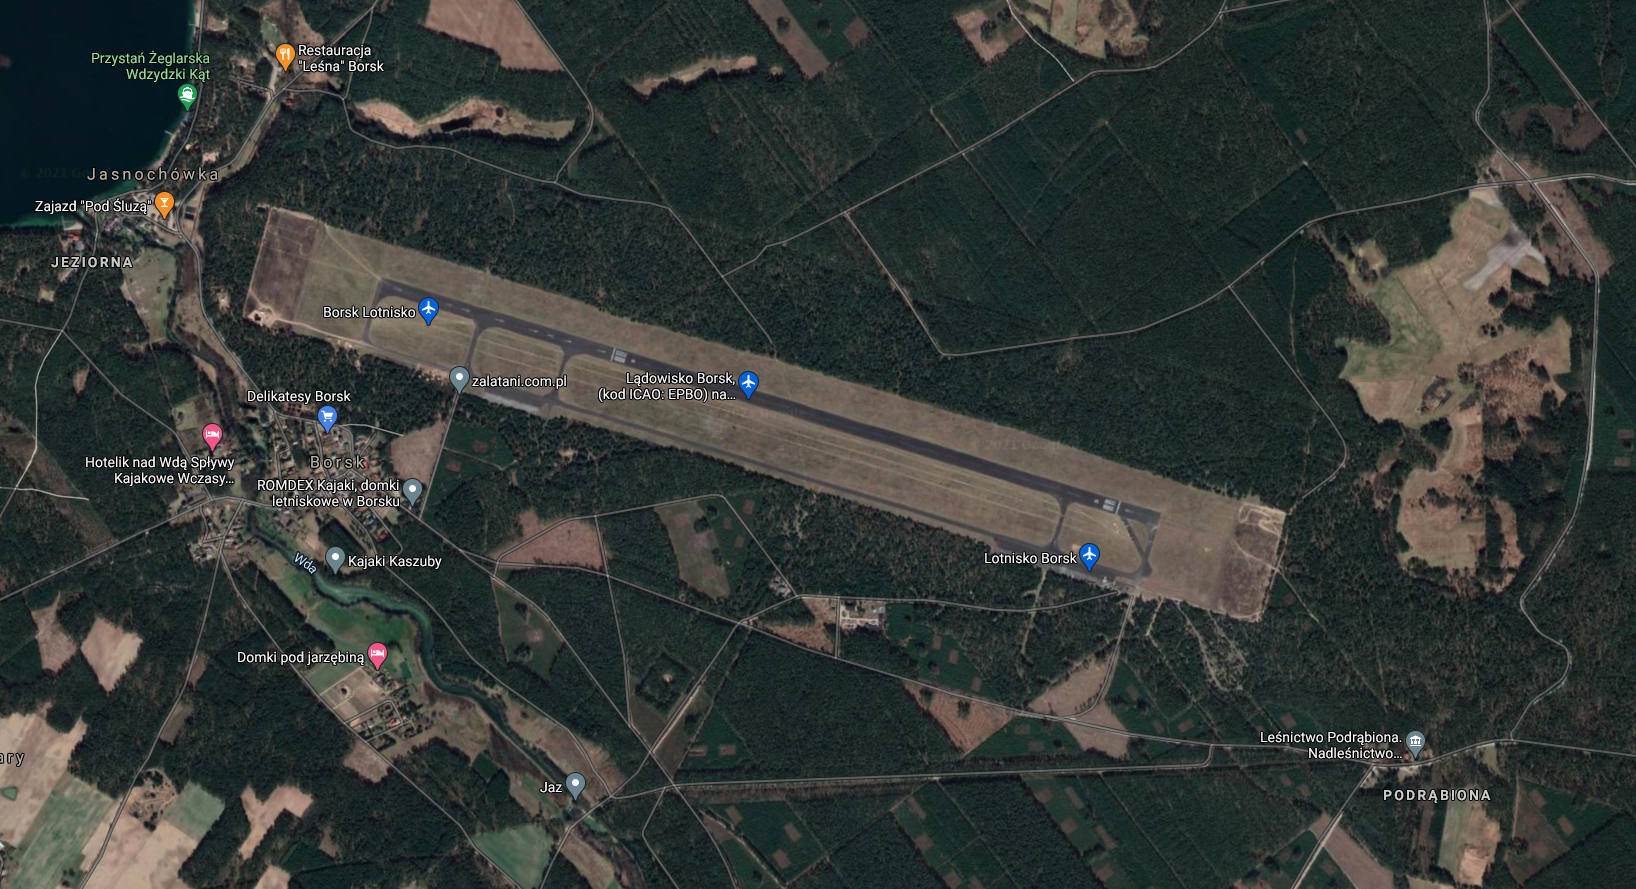 Borsk airport. 2013 year. Photo of google